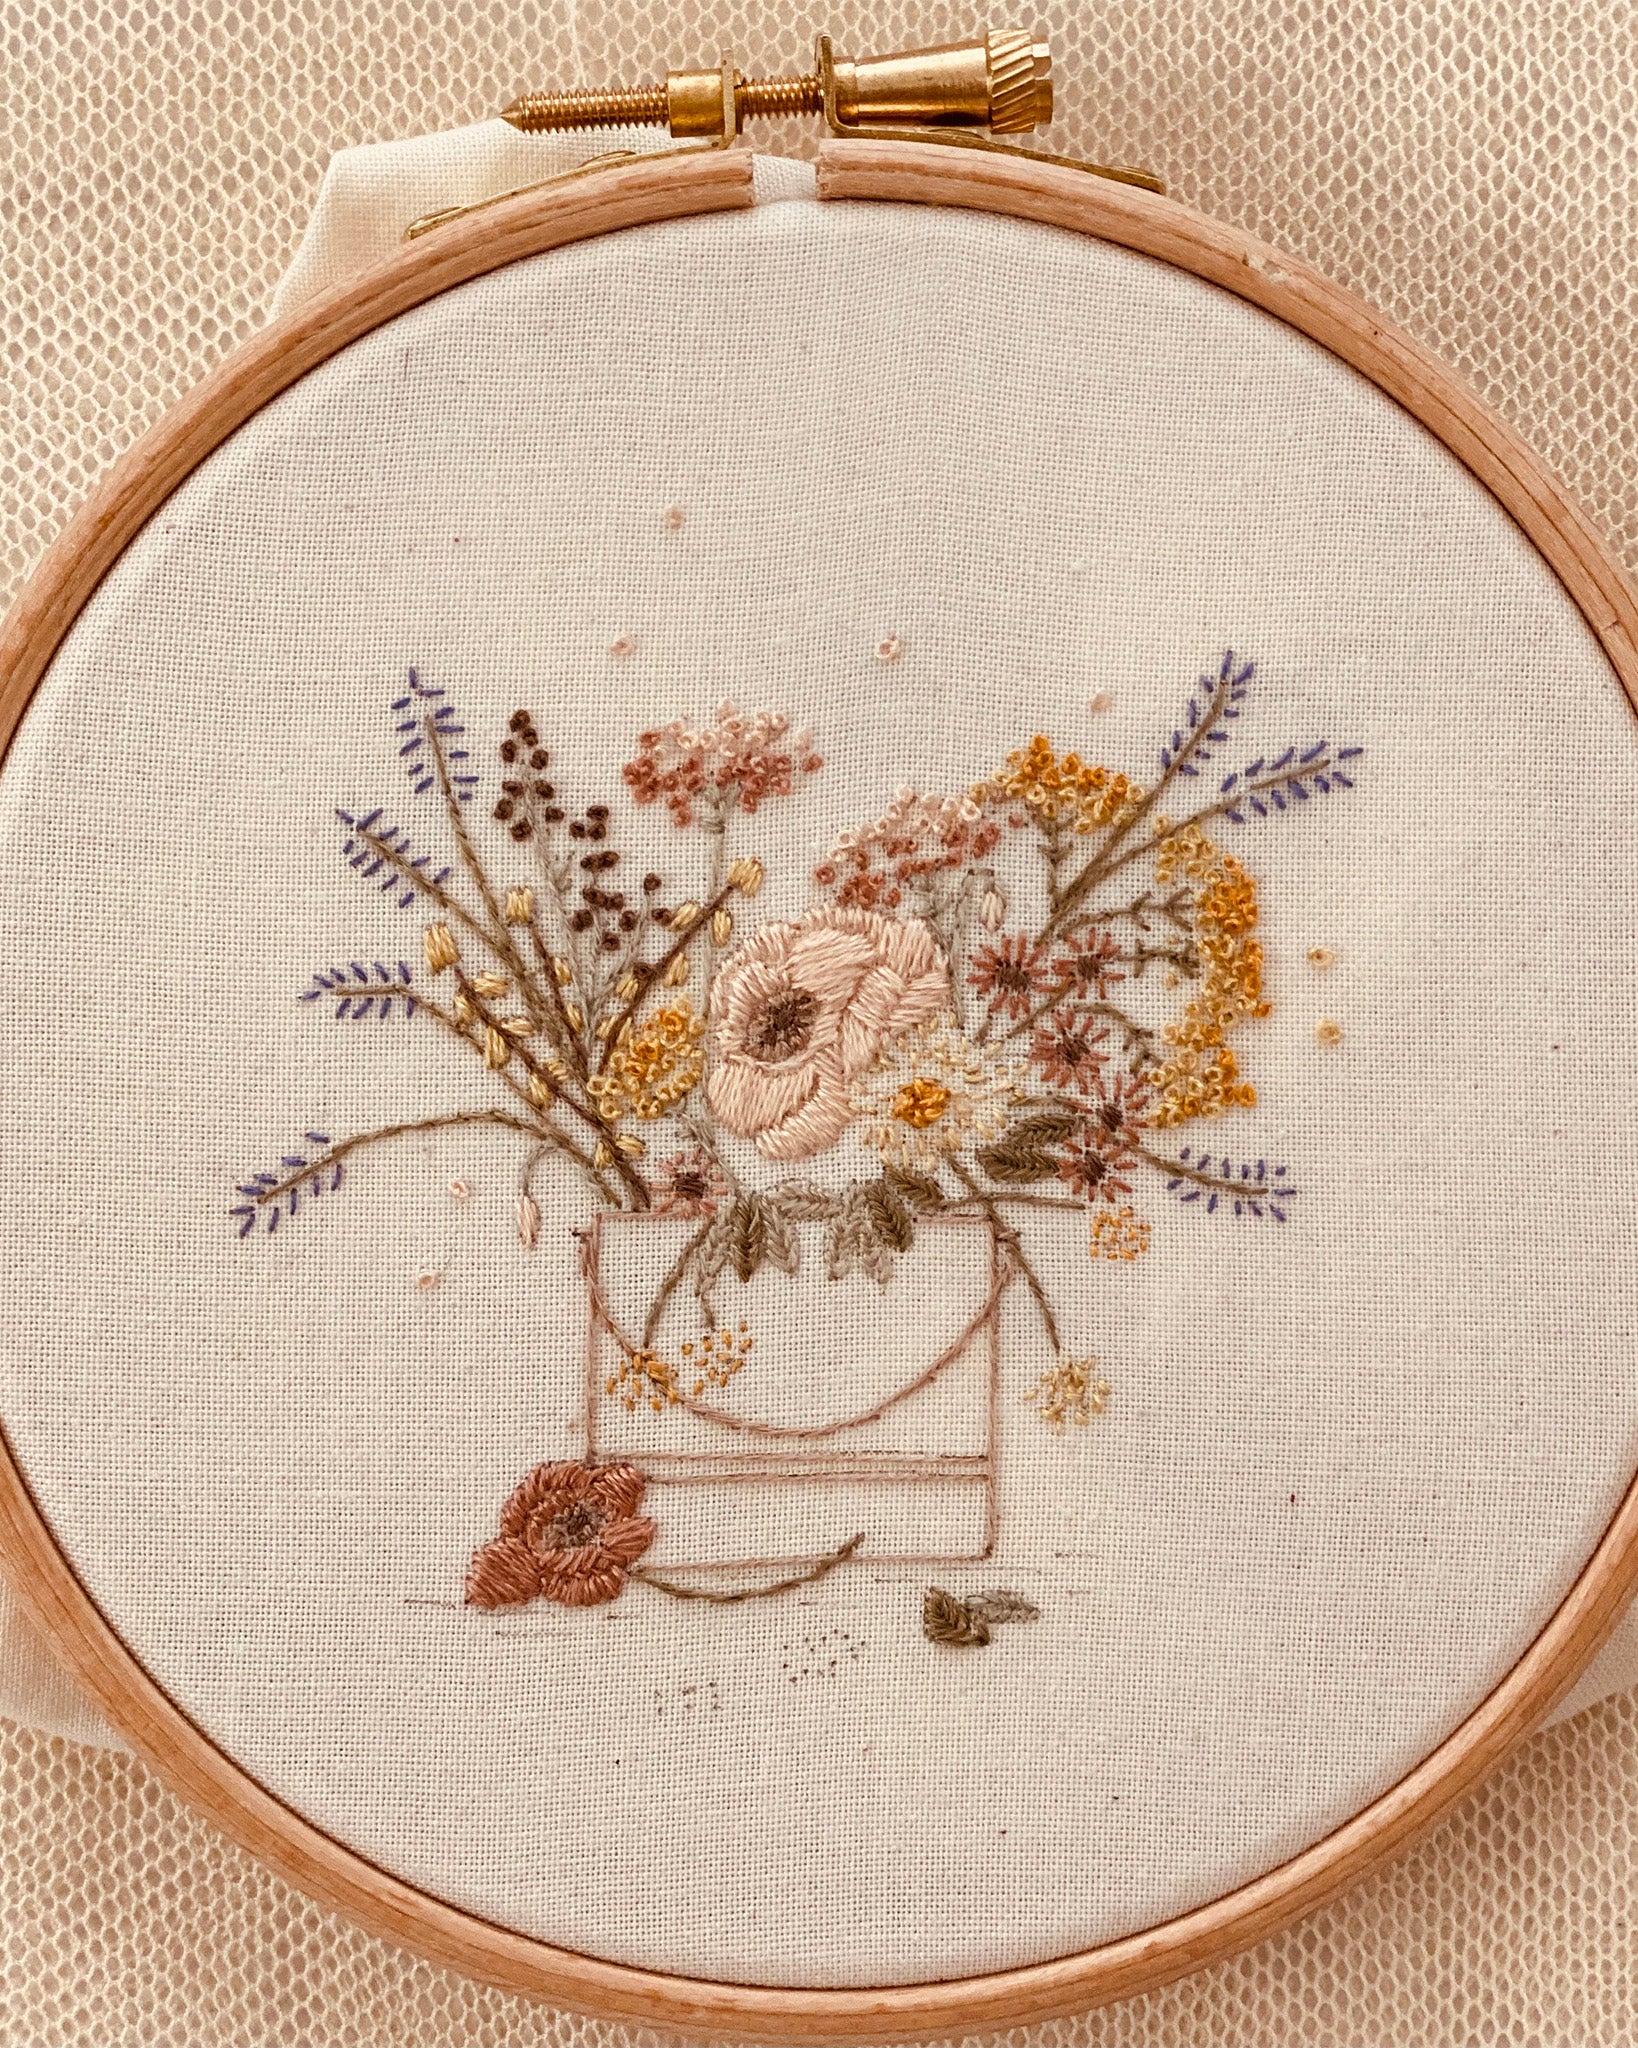 Gathering Wildflowers Embroidery Kit - Modern Prairie